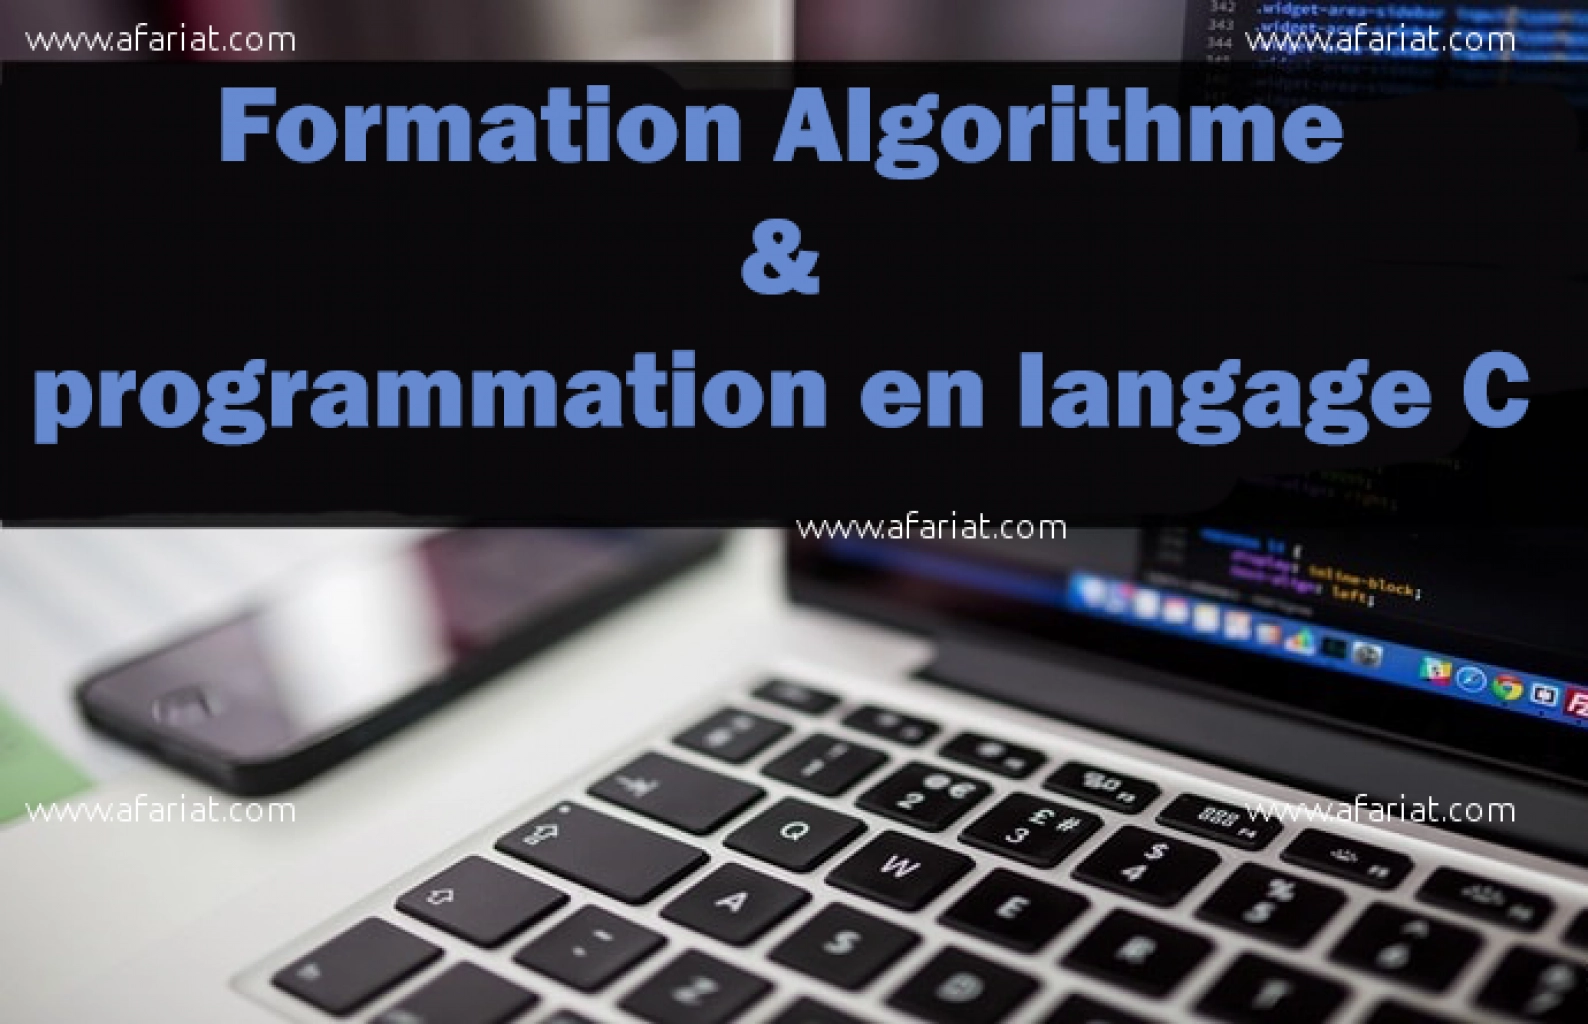 Formation Algorithme & programmation en langage C